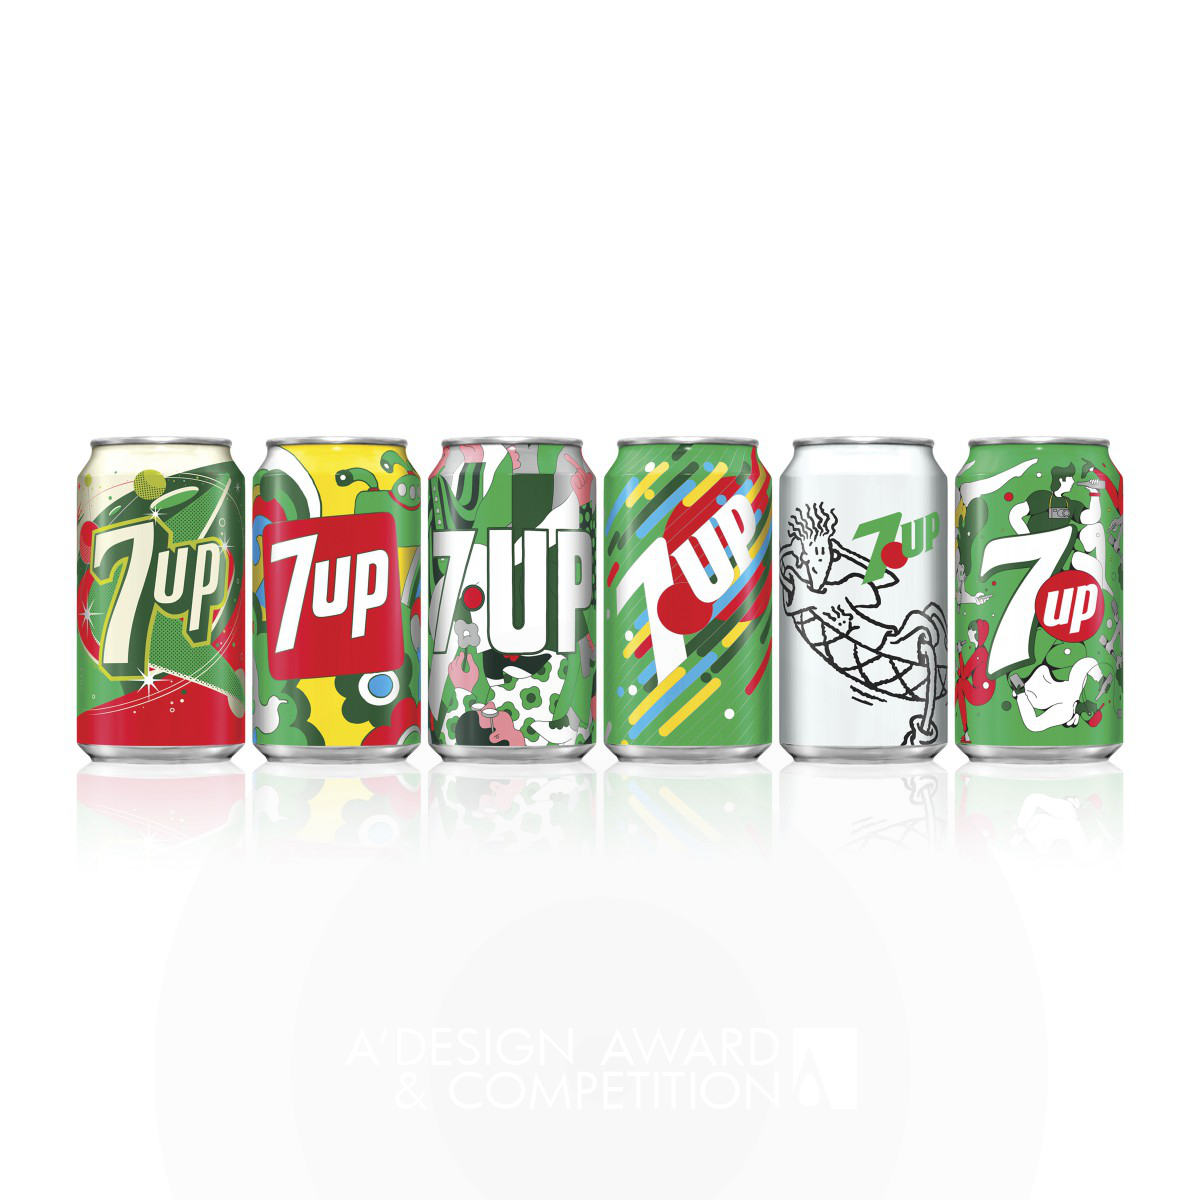 7UP Vintage Pack 2018 Beverage Packaging by PepsiCo Design and Innovation